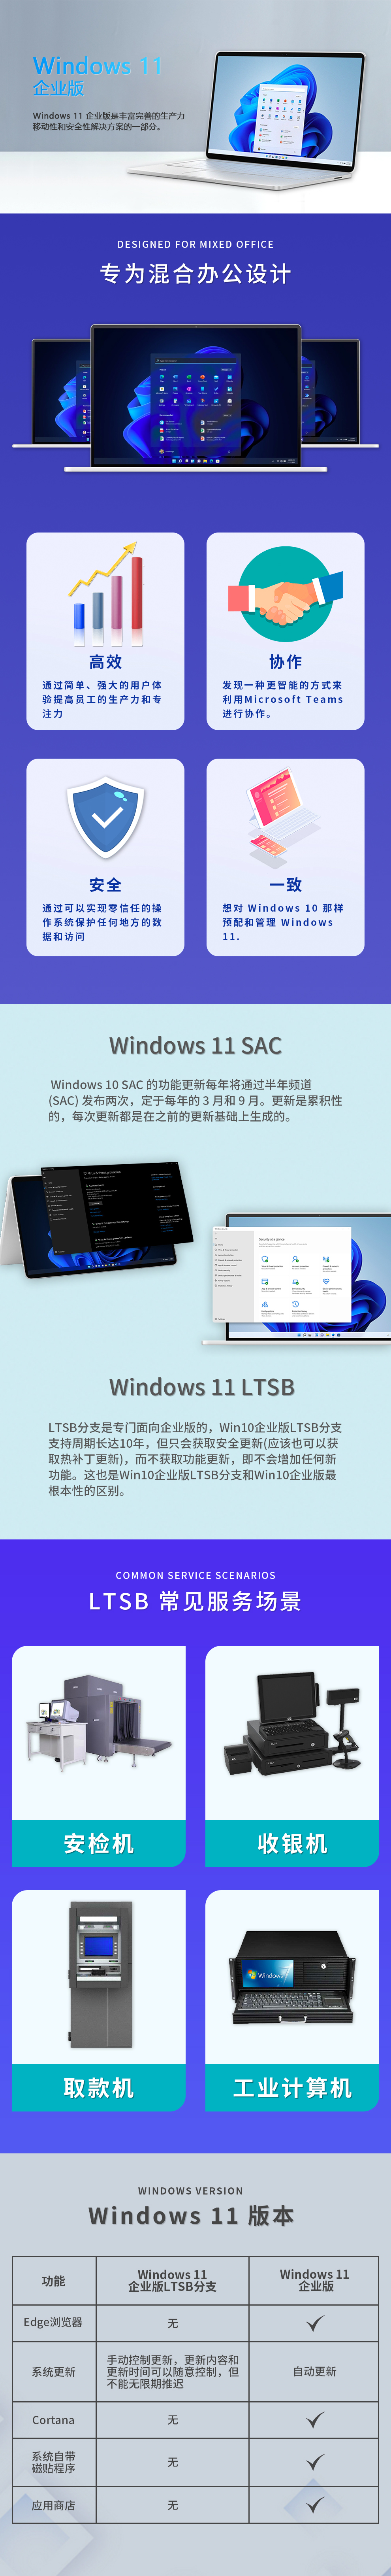 Windows 11 企业版.jpg